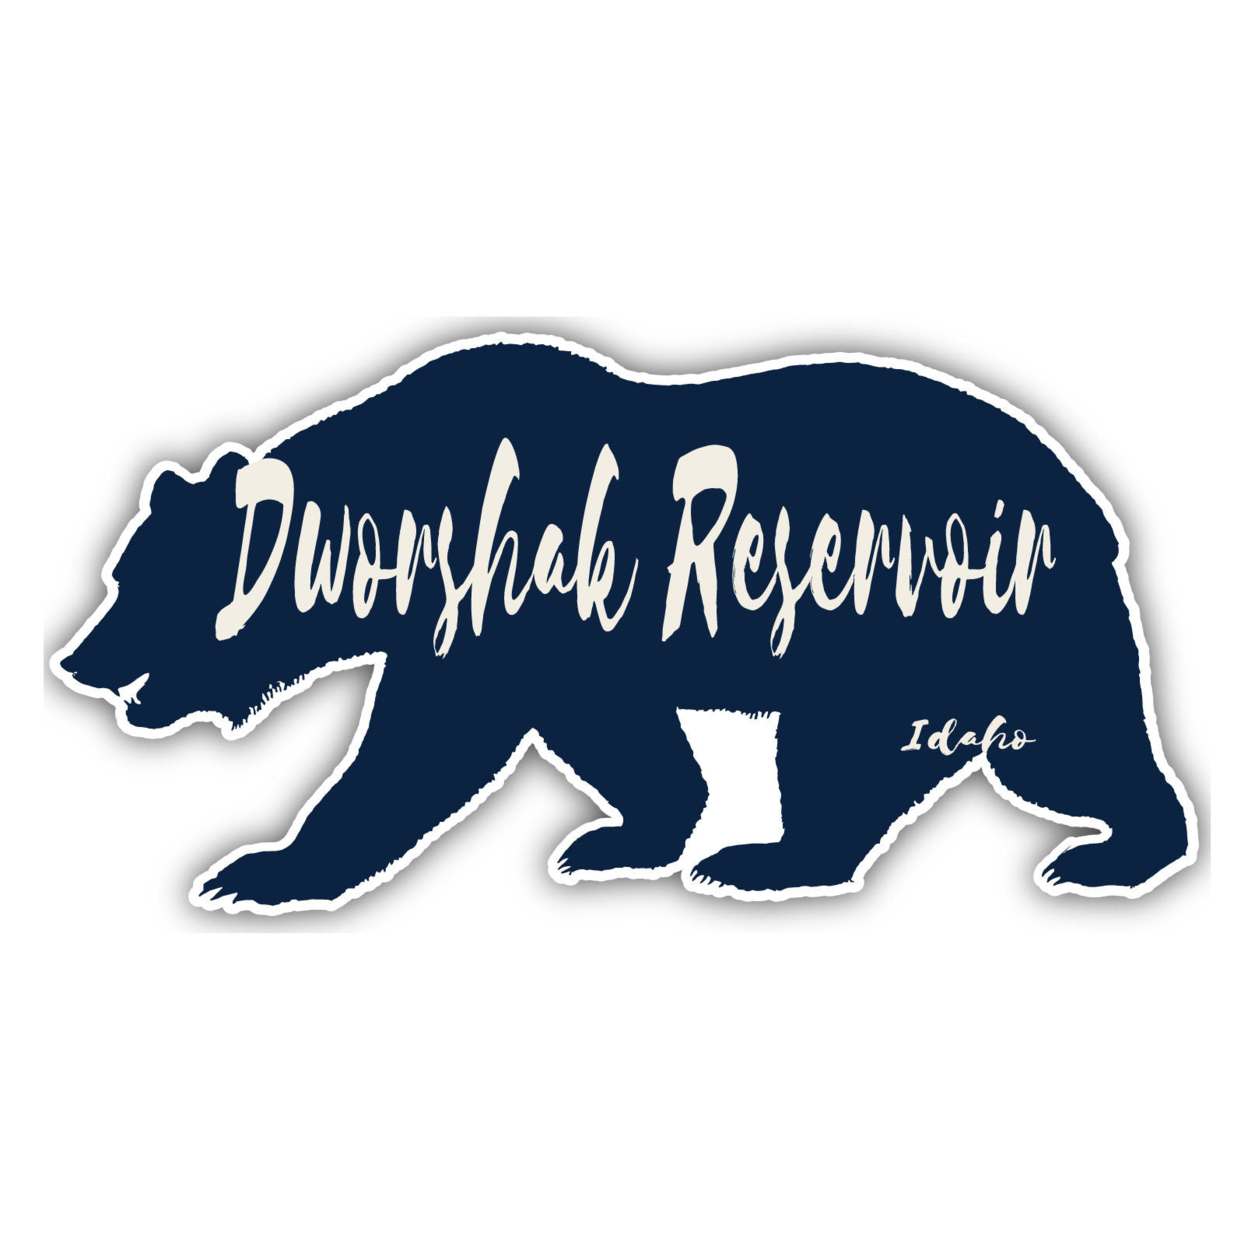 Dworshak Reservoir Idaho Souvenir Decorative Stickers (Choose Theme And Size) - 4-Pack, 10-Inch, Tent